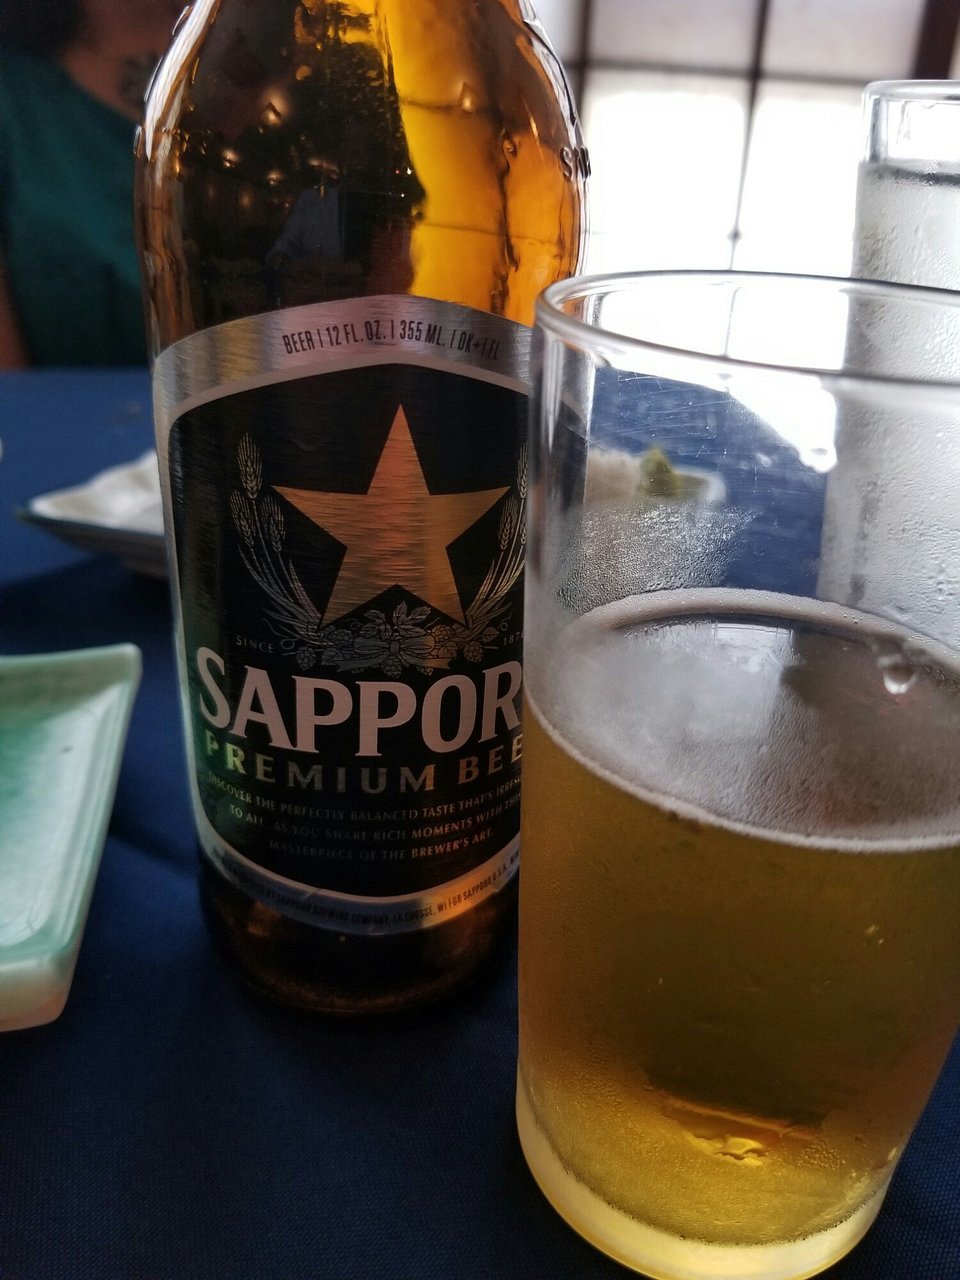 Camon Japanese Restaurant